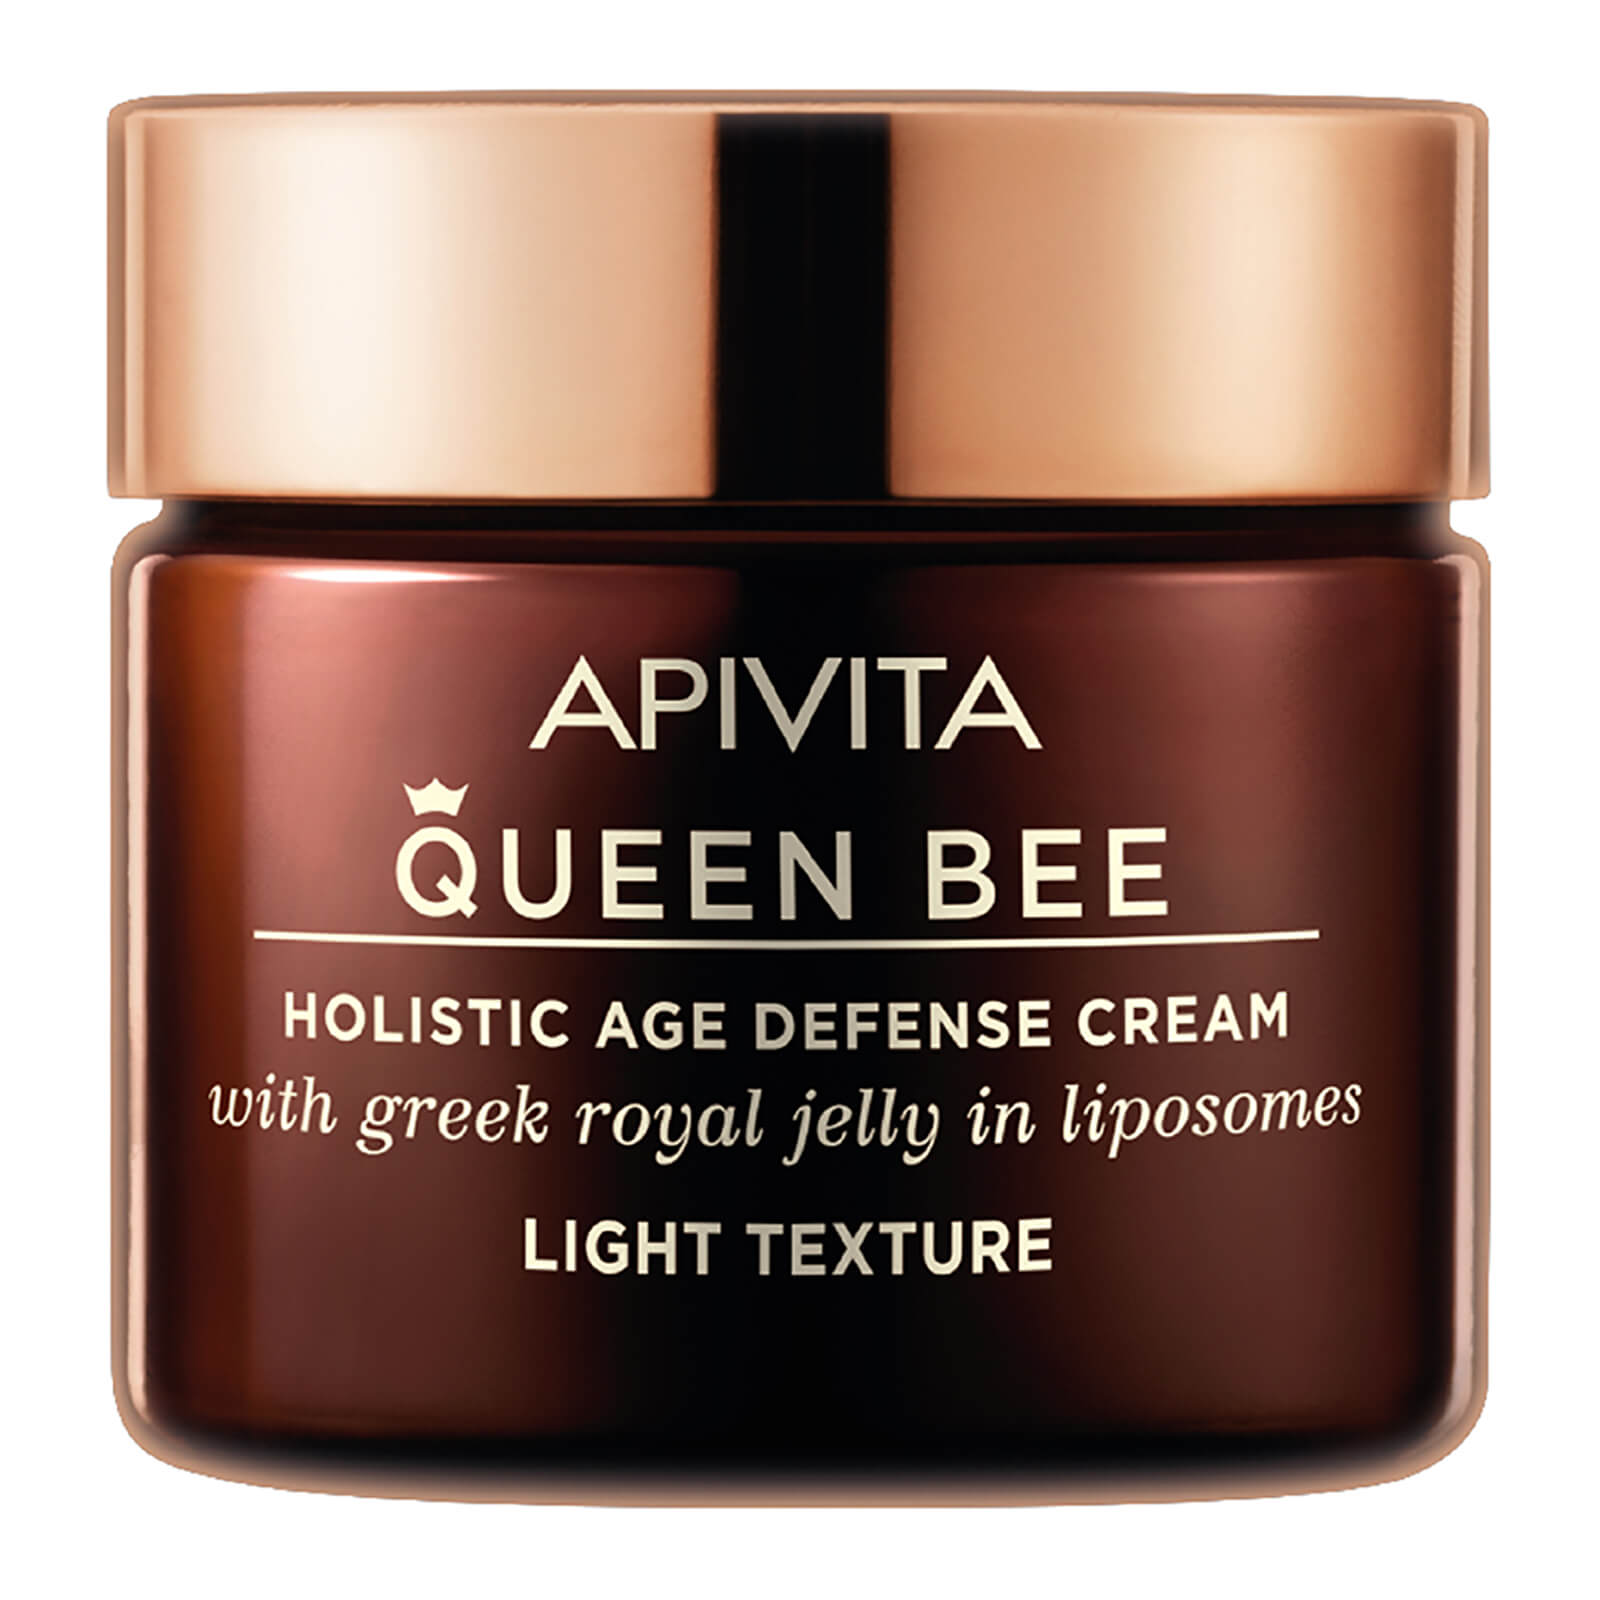 APIVITA Queen Bee Holistic Age Defense Cream - Light Texture 50ml